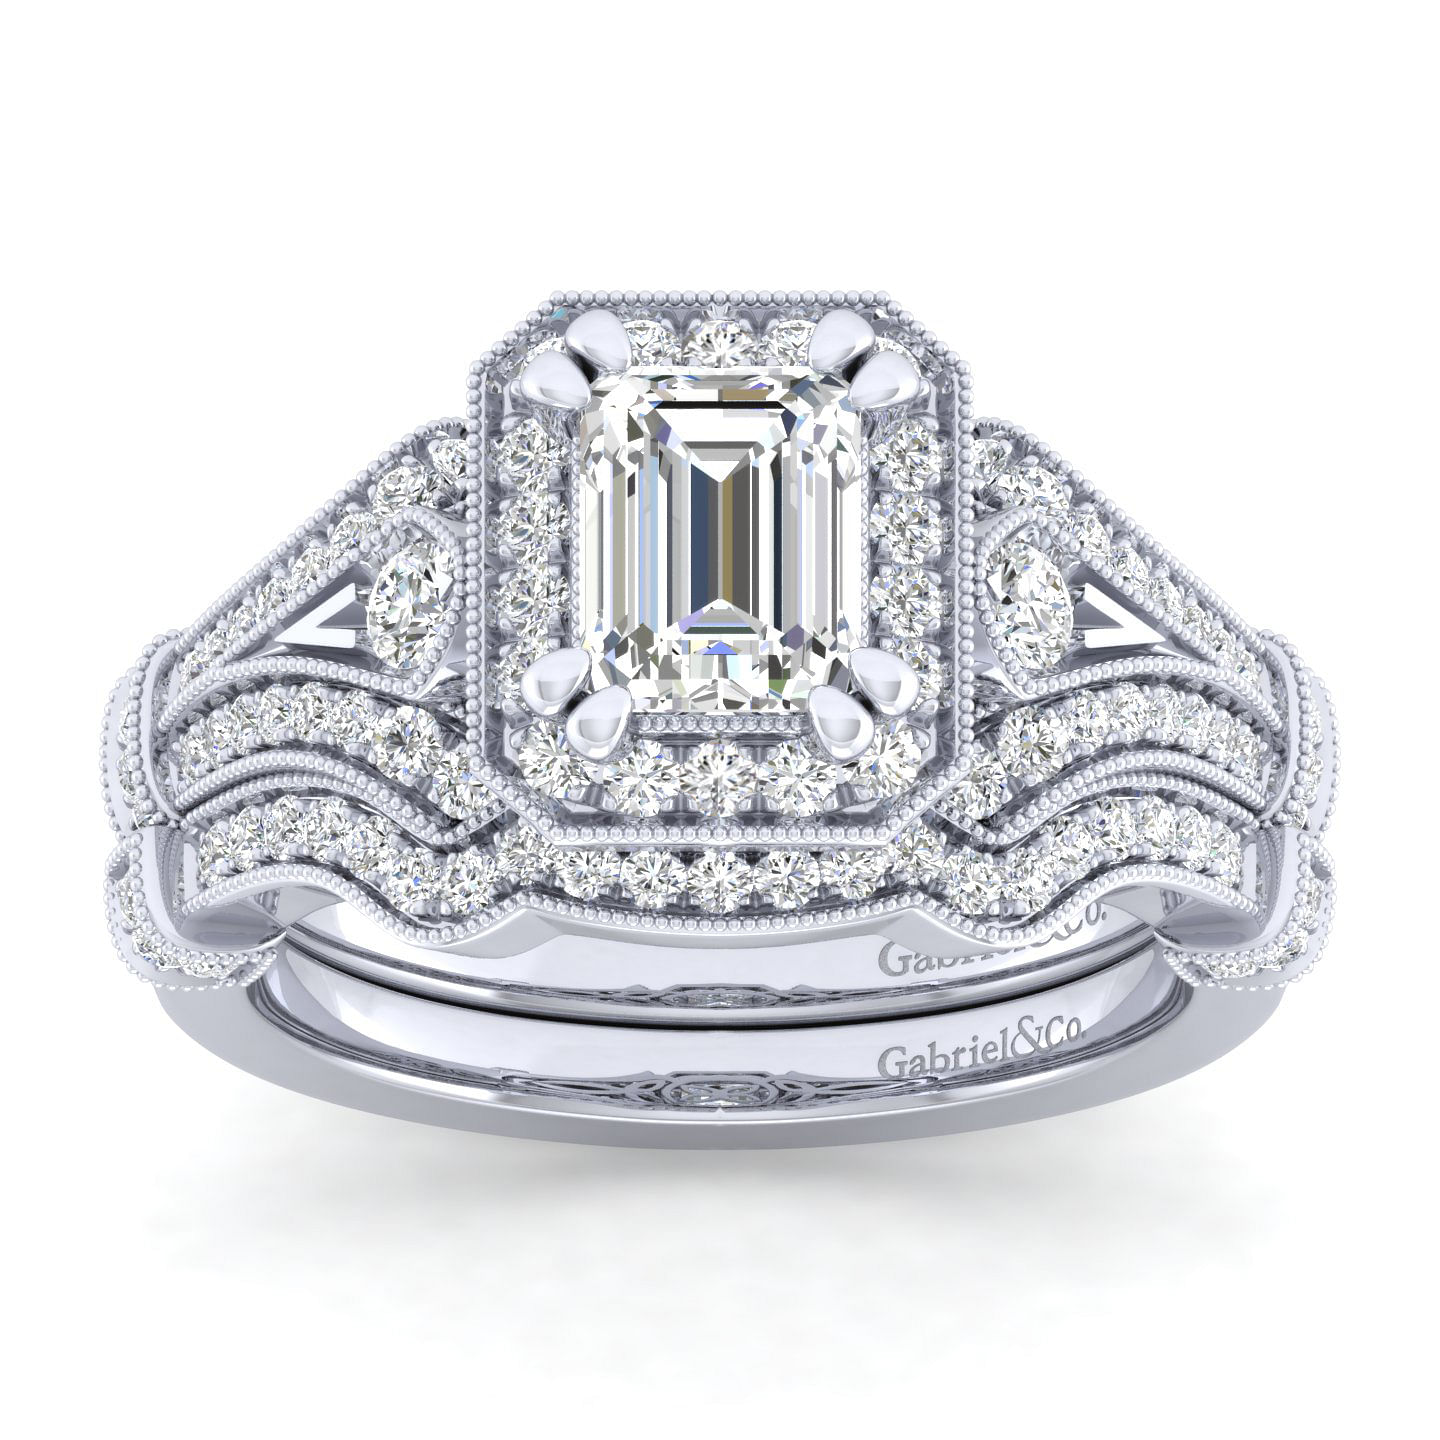 Vintage Inspired 14K White Gold Halo Emerald Cut Diamond Engagement Ring